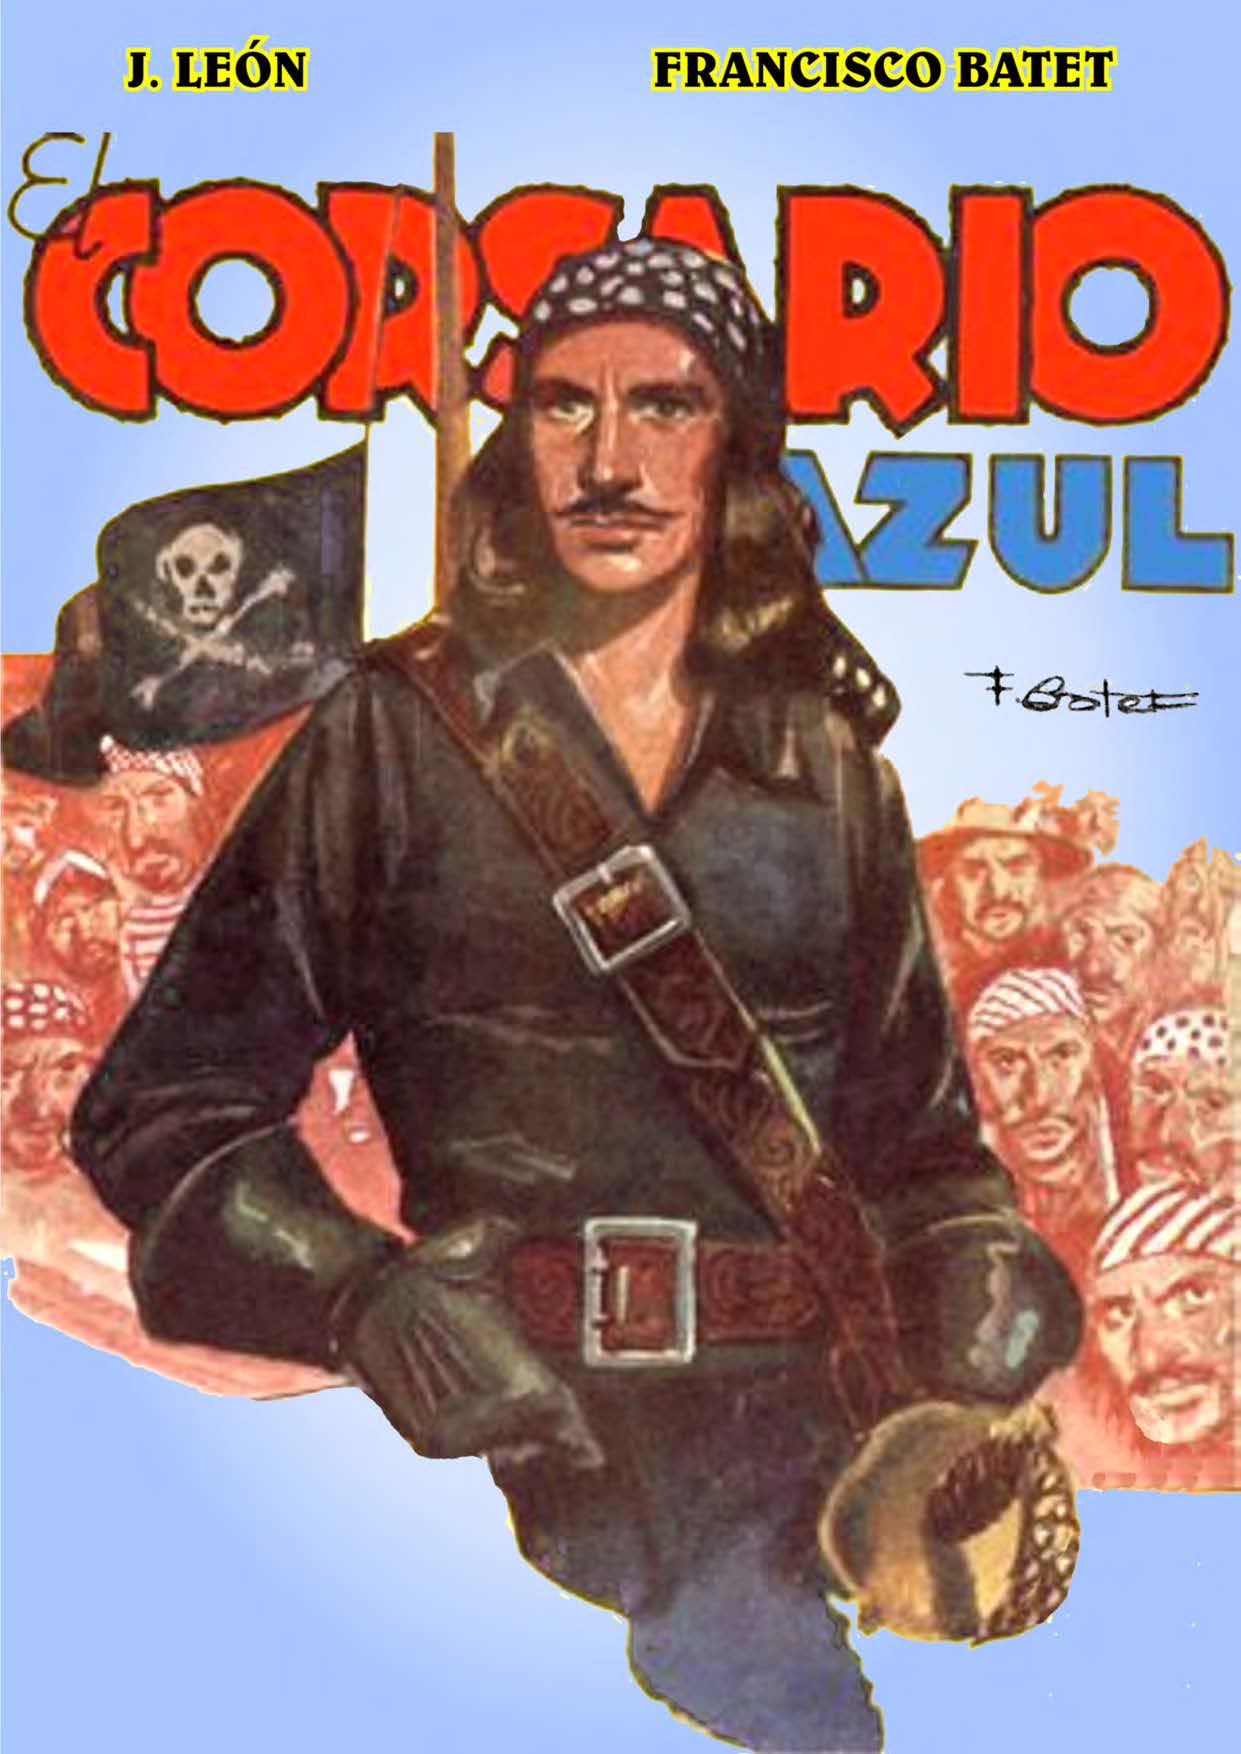 Book Cover For El Corsario Azul